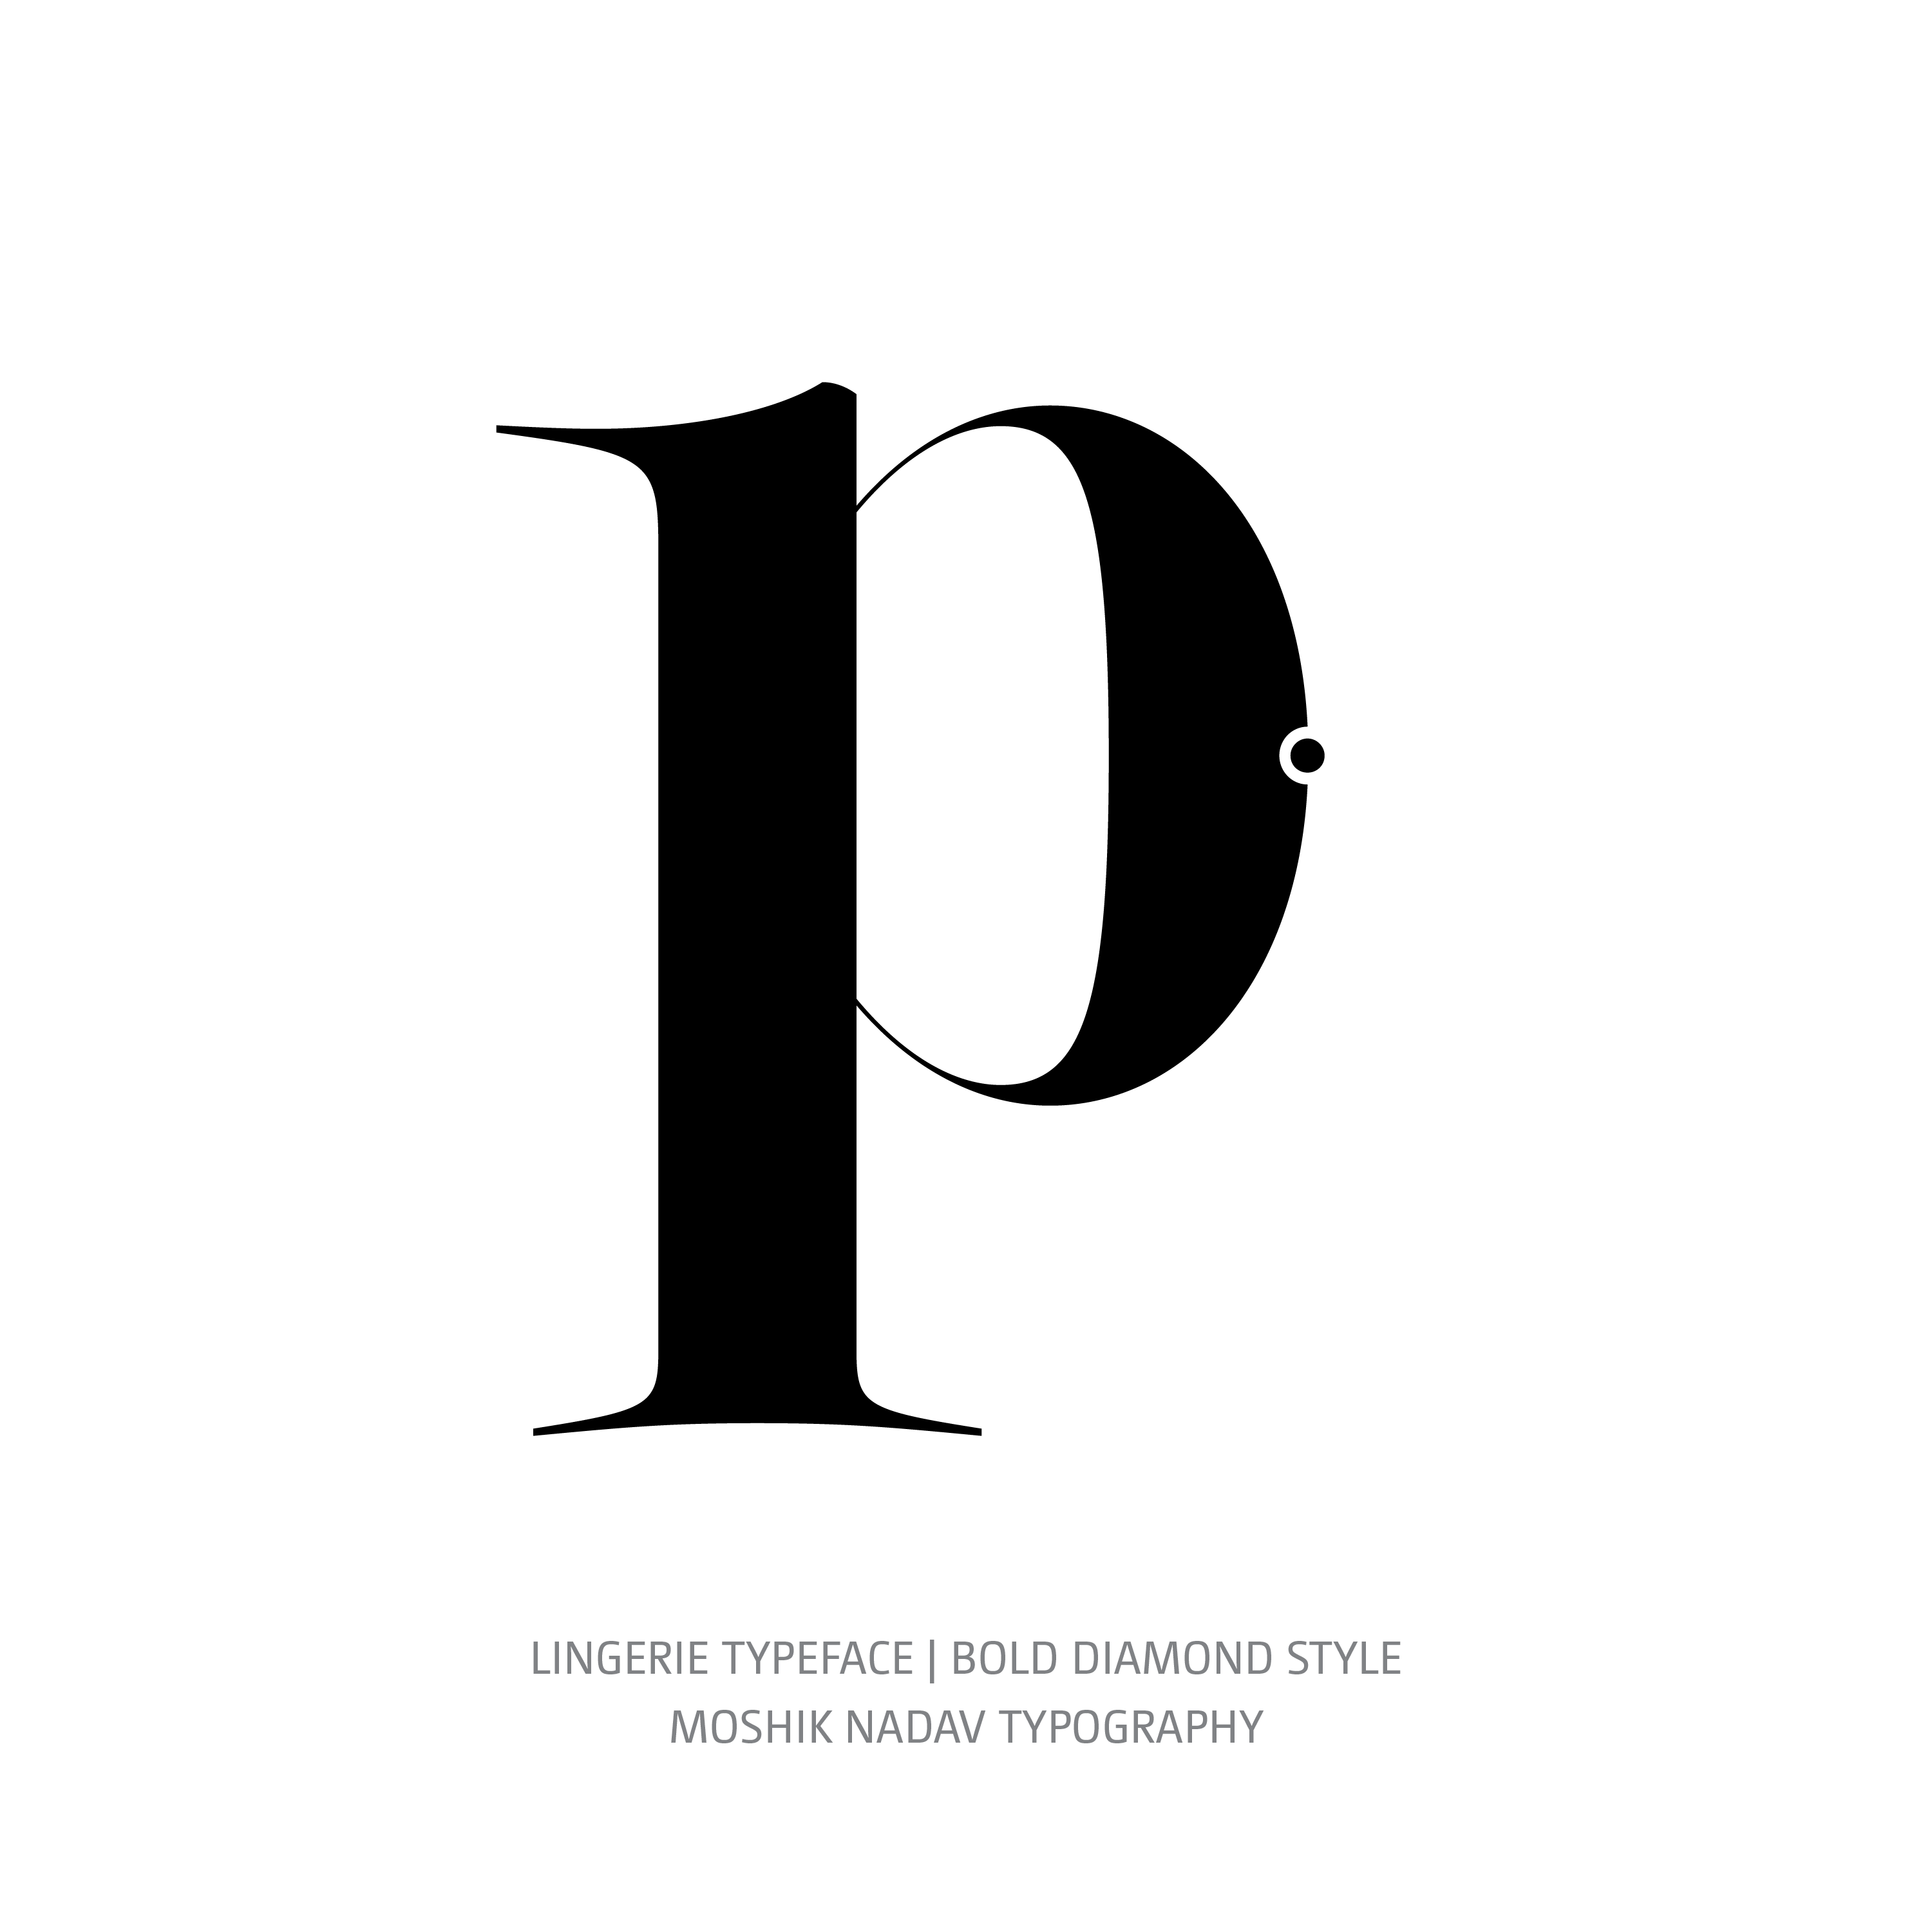 Lingerie Typeface Bold Diamond p